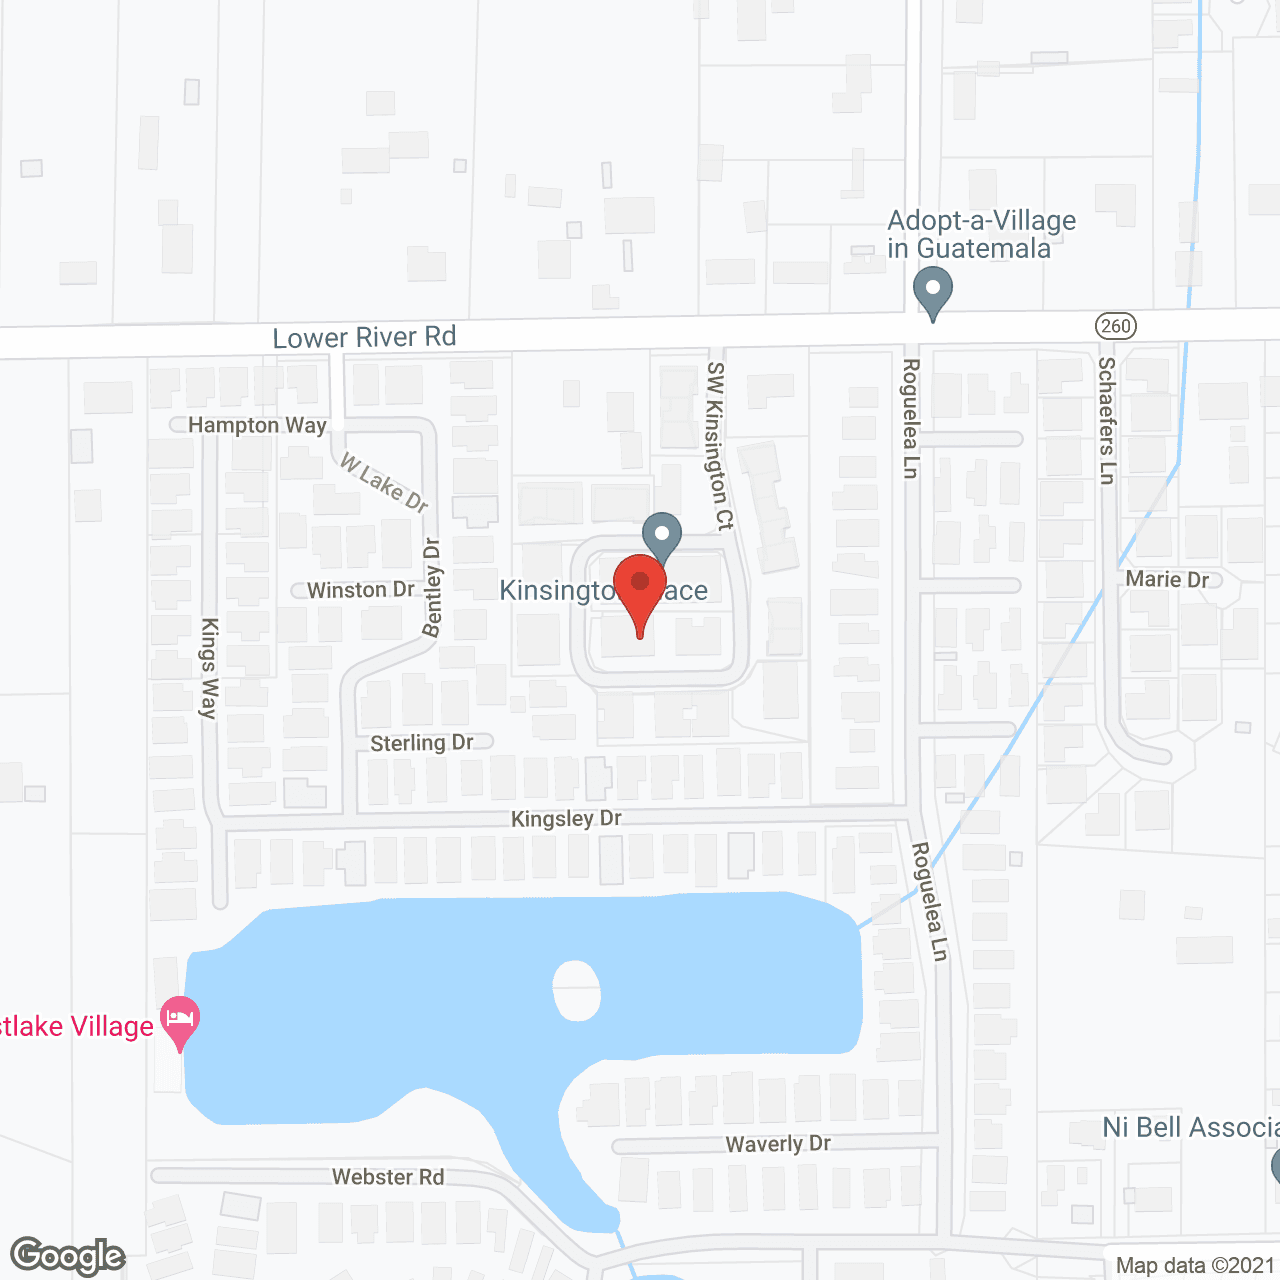 Kinsington Court in google map